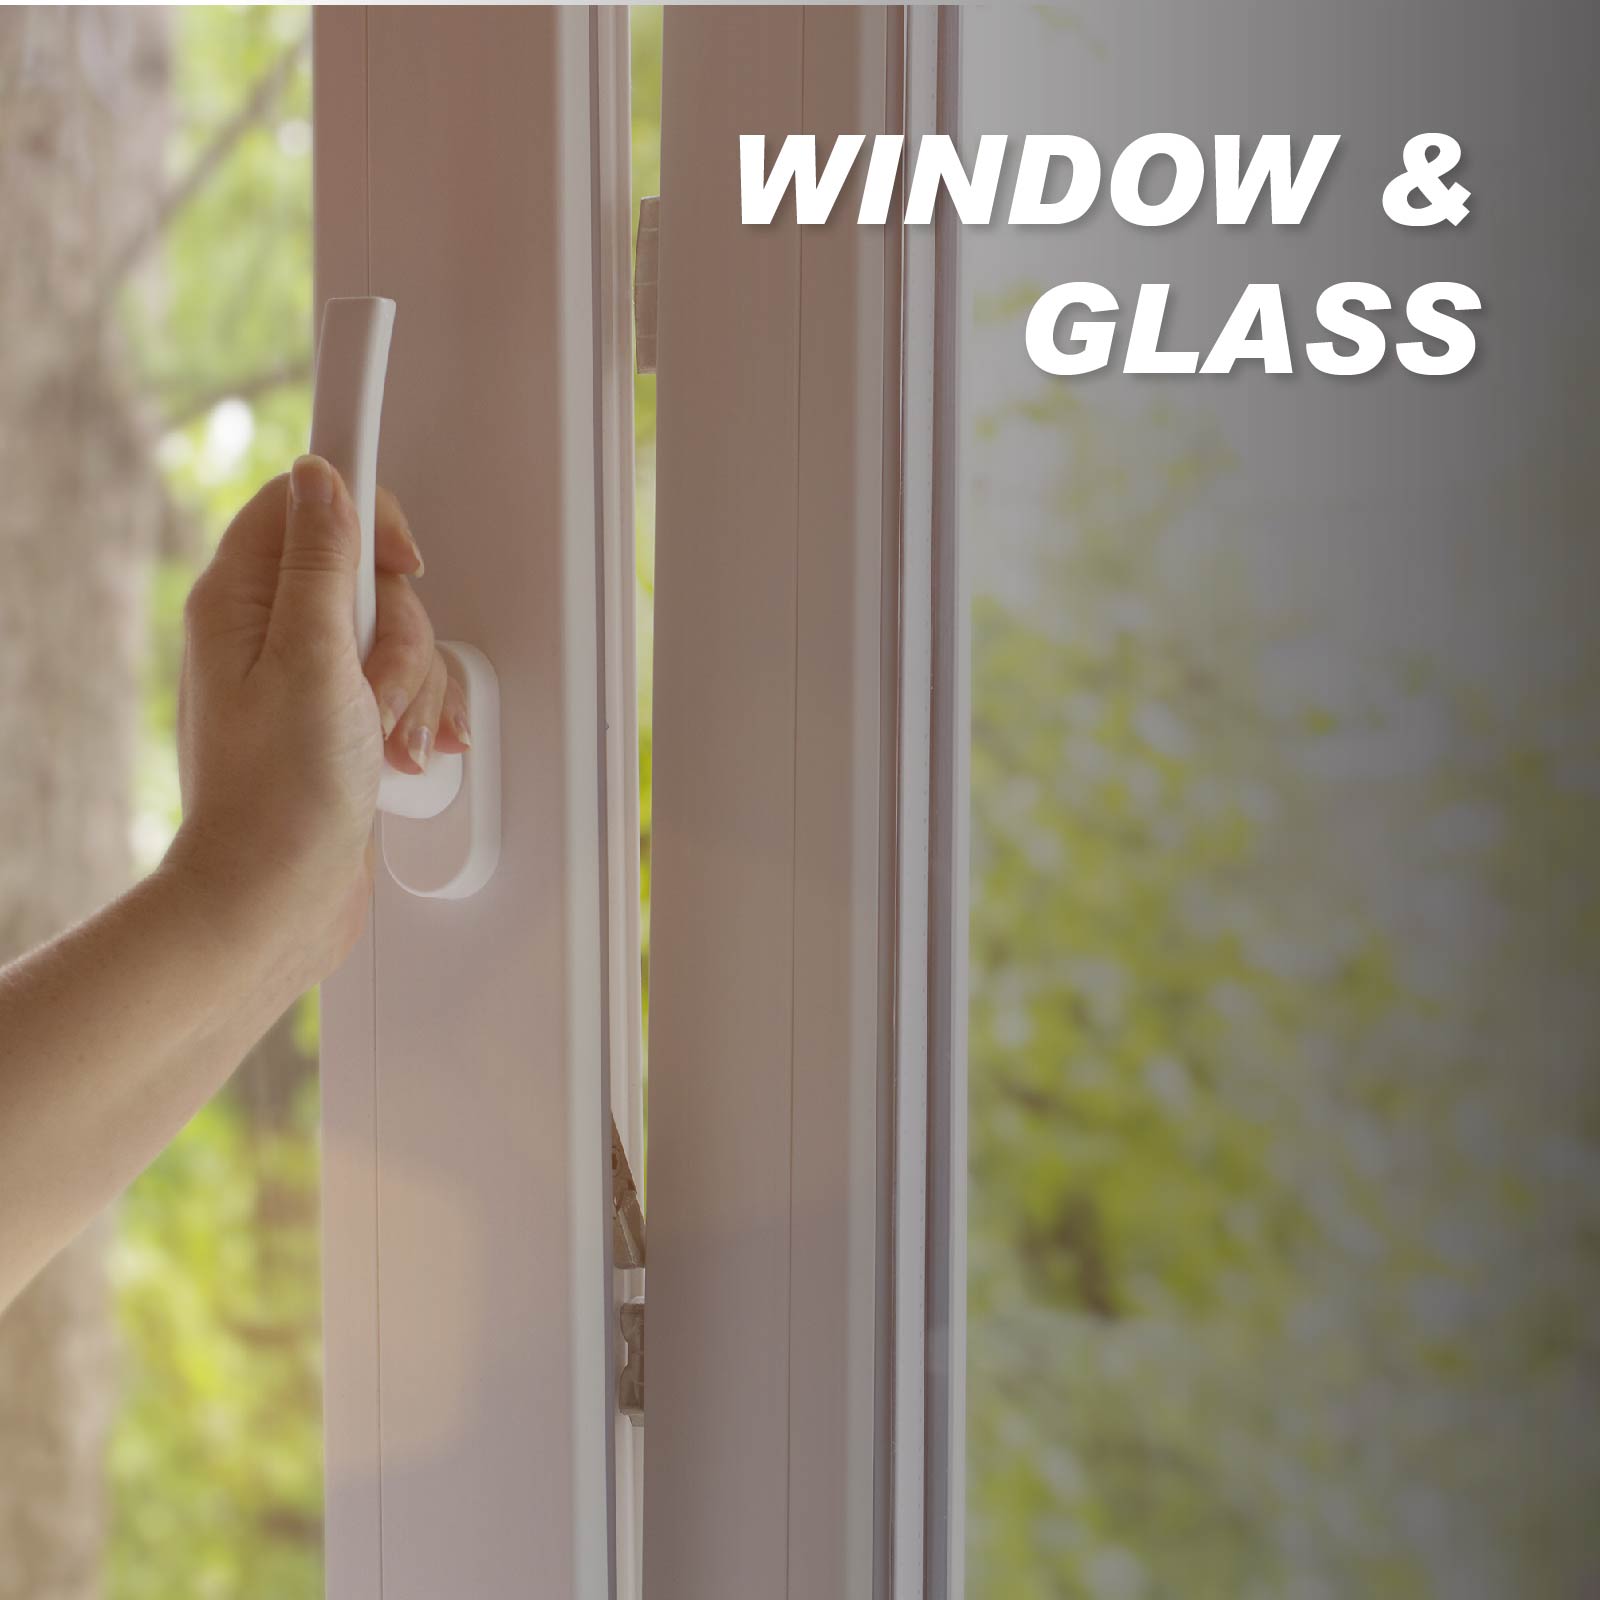 Glass & Window Frame Cleaners